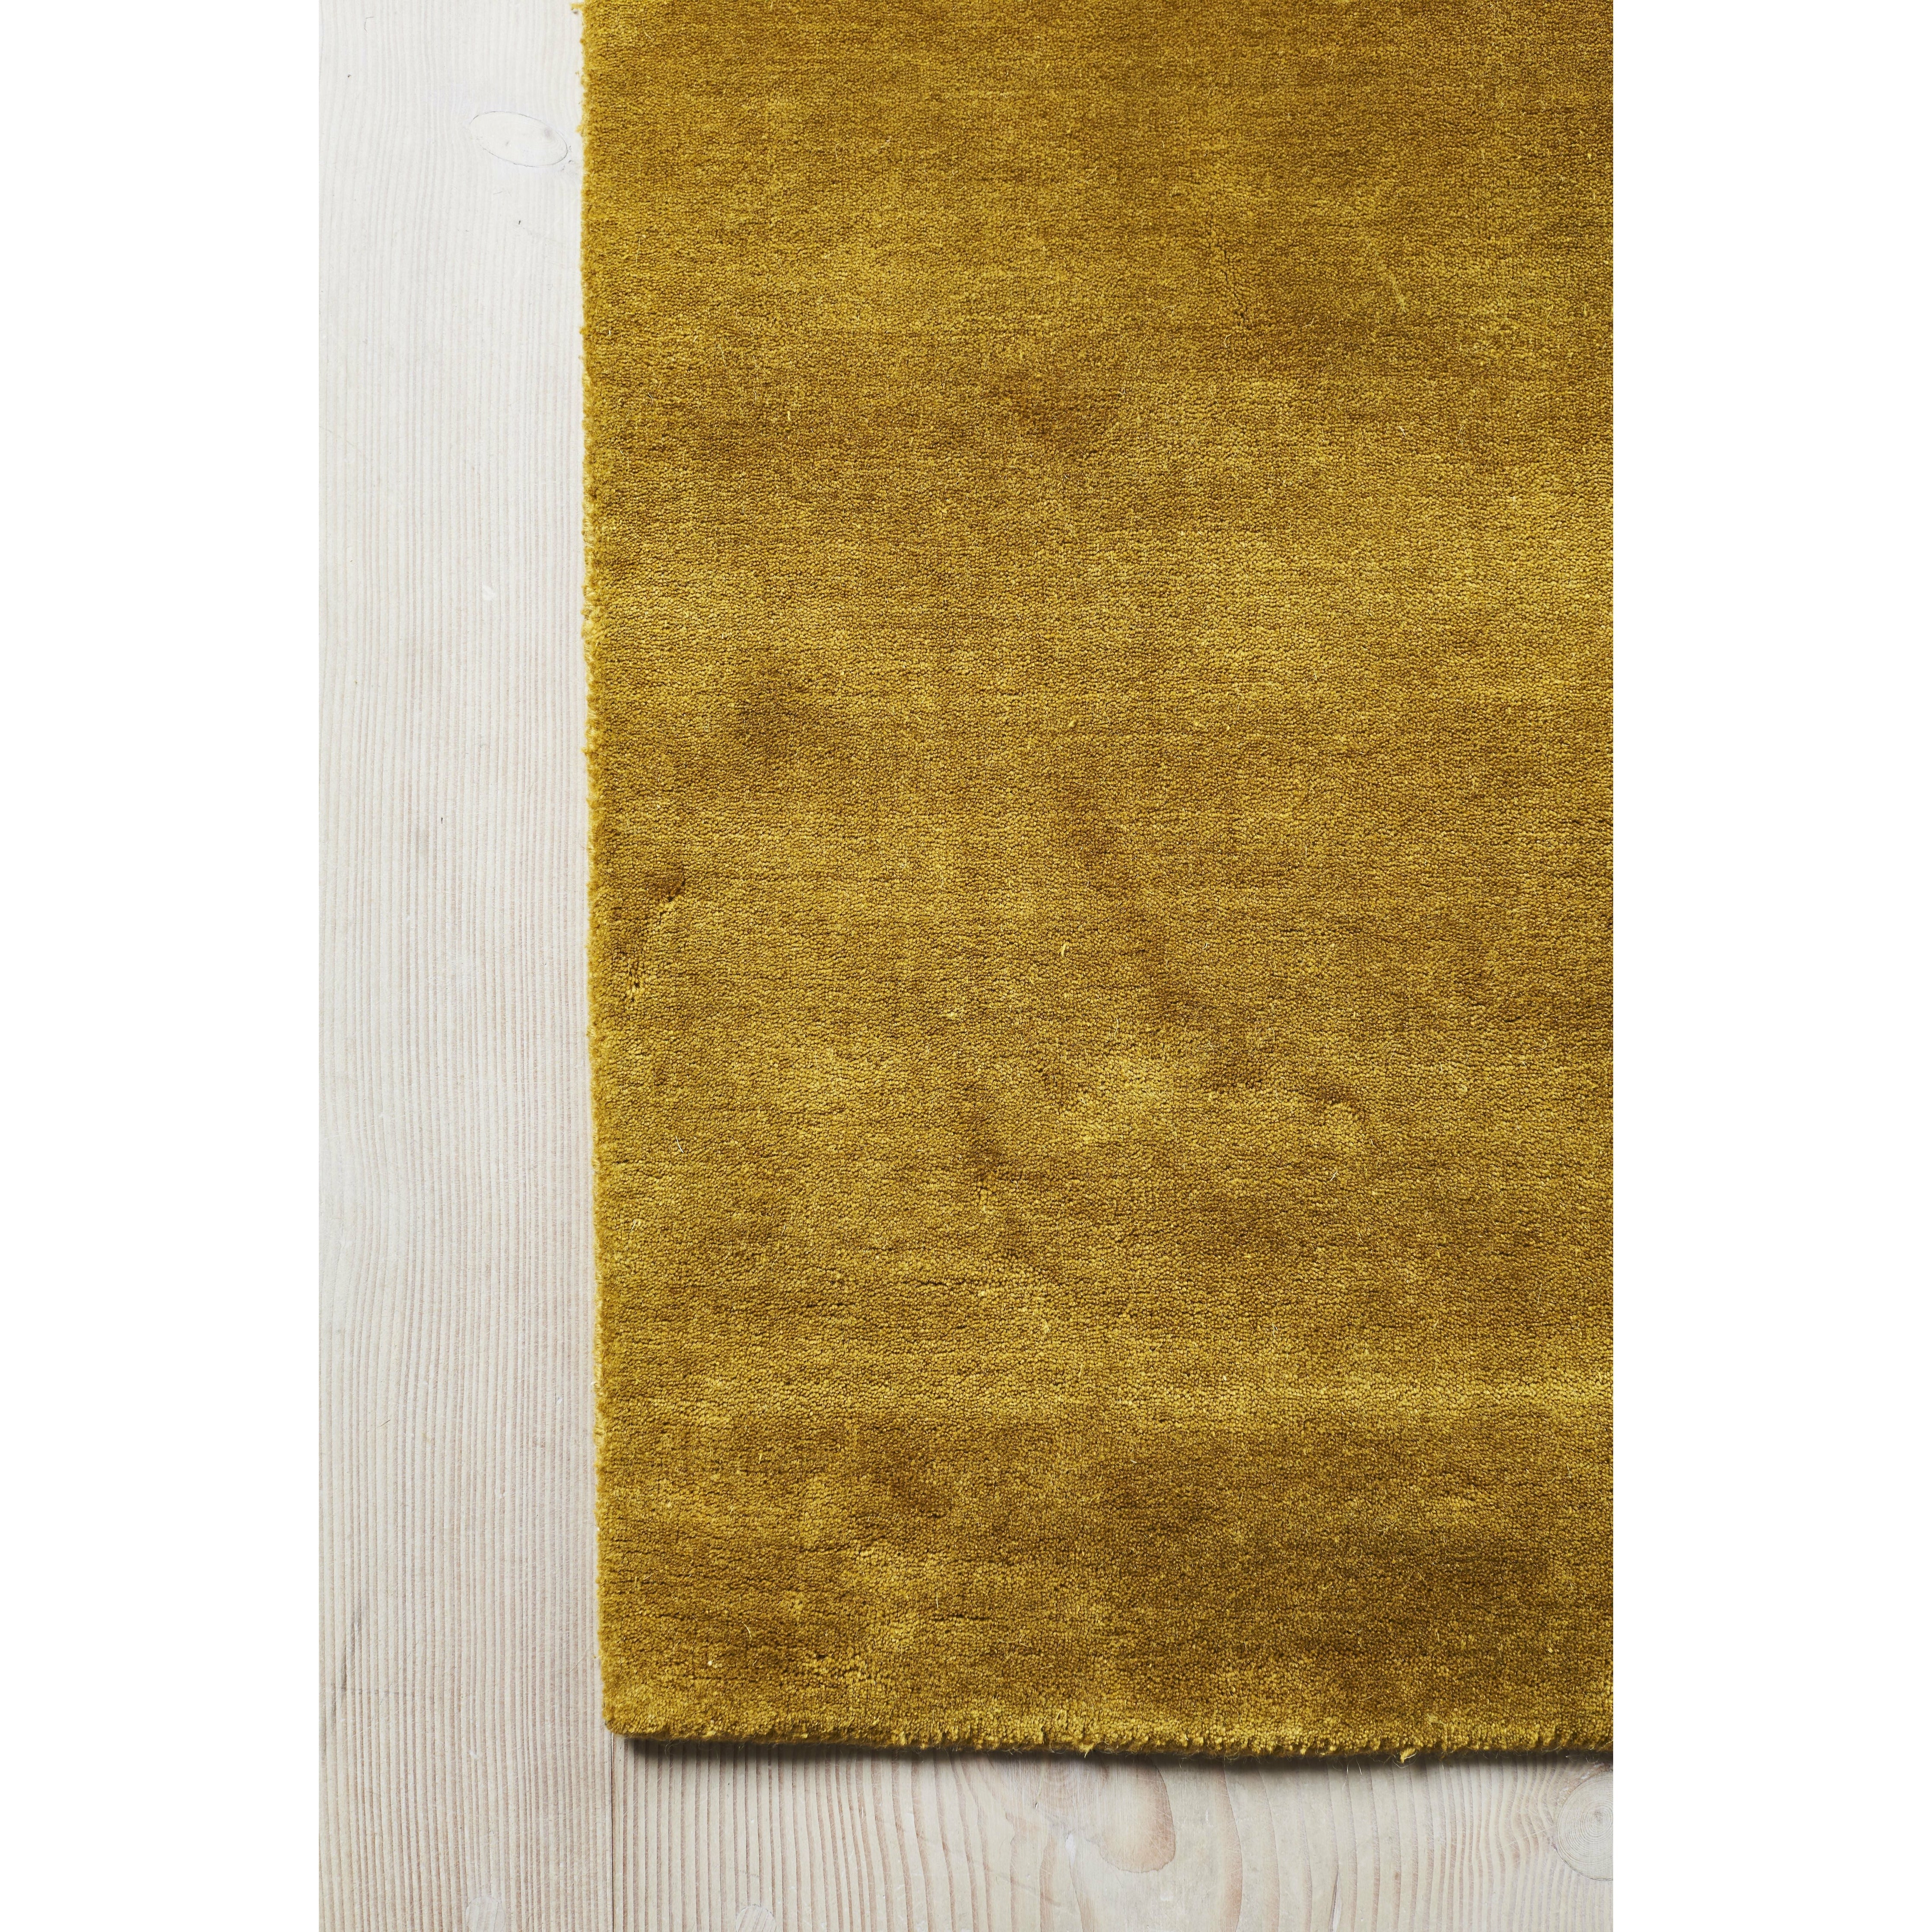 Massimo Earth Bamboo Dywan Chińczyk żółty, 200x300 cm